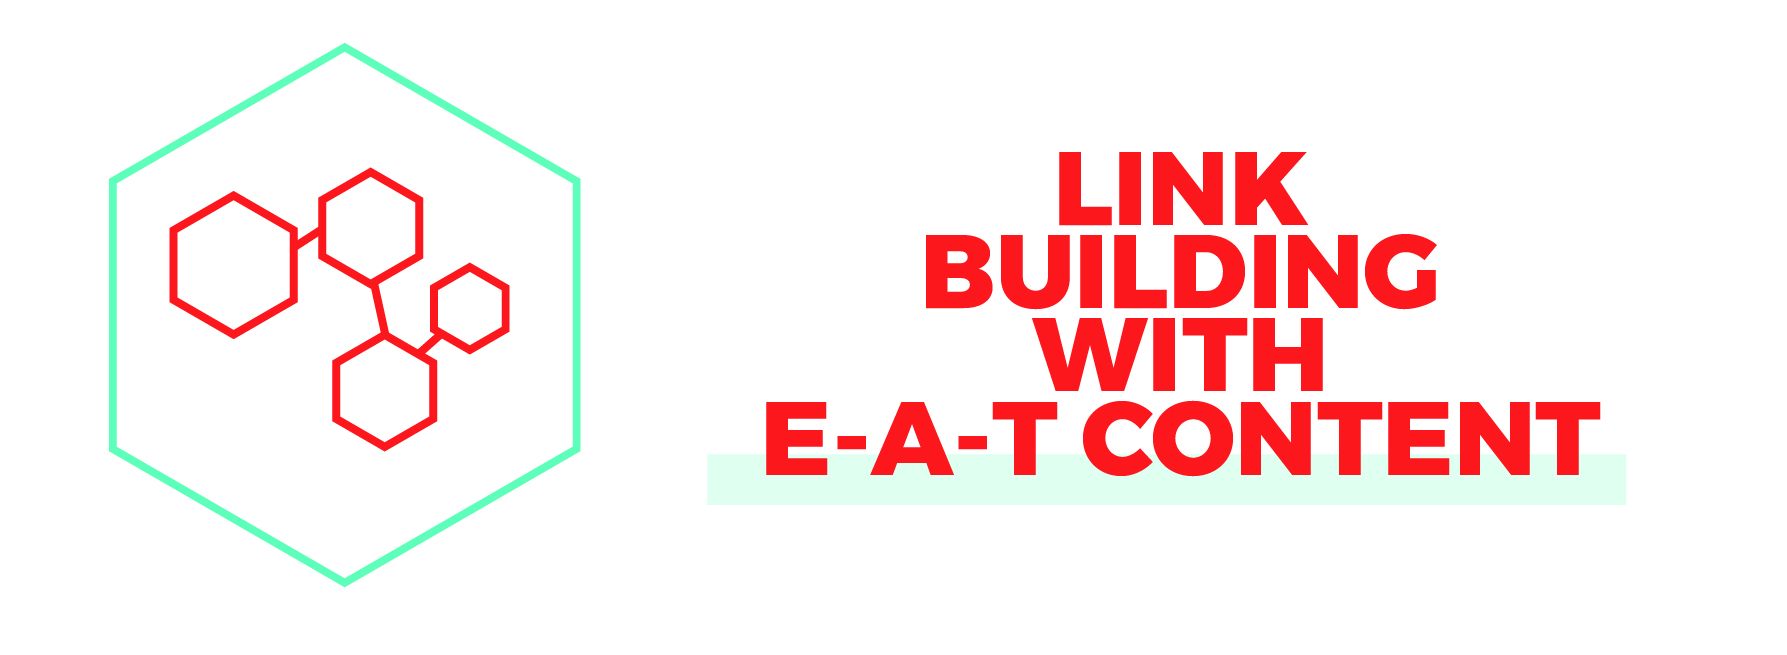 https://purelinq.com/wp-content/uploads/2020/08/Link-Building-with-EAT-Content.jpg